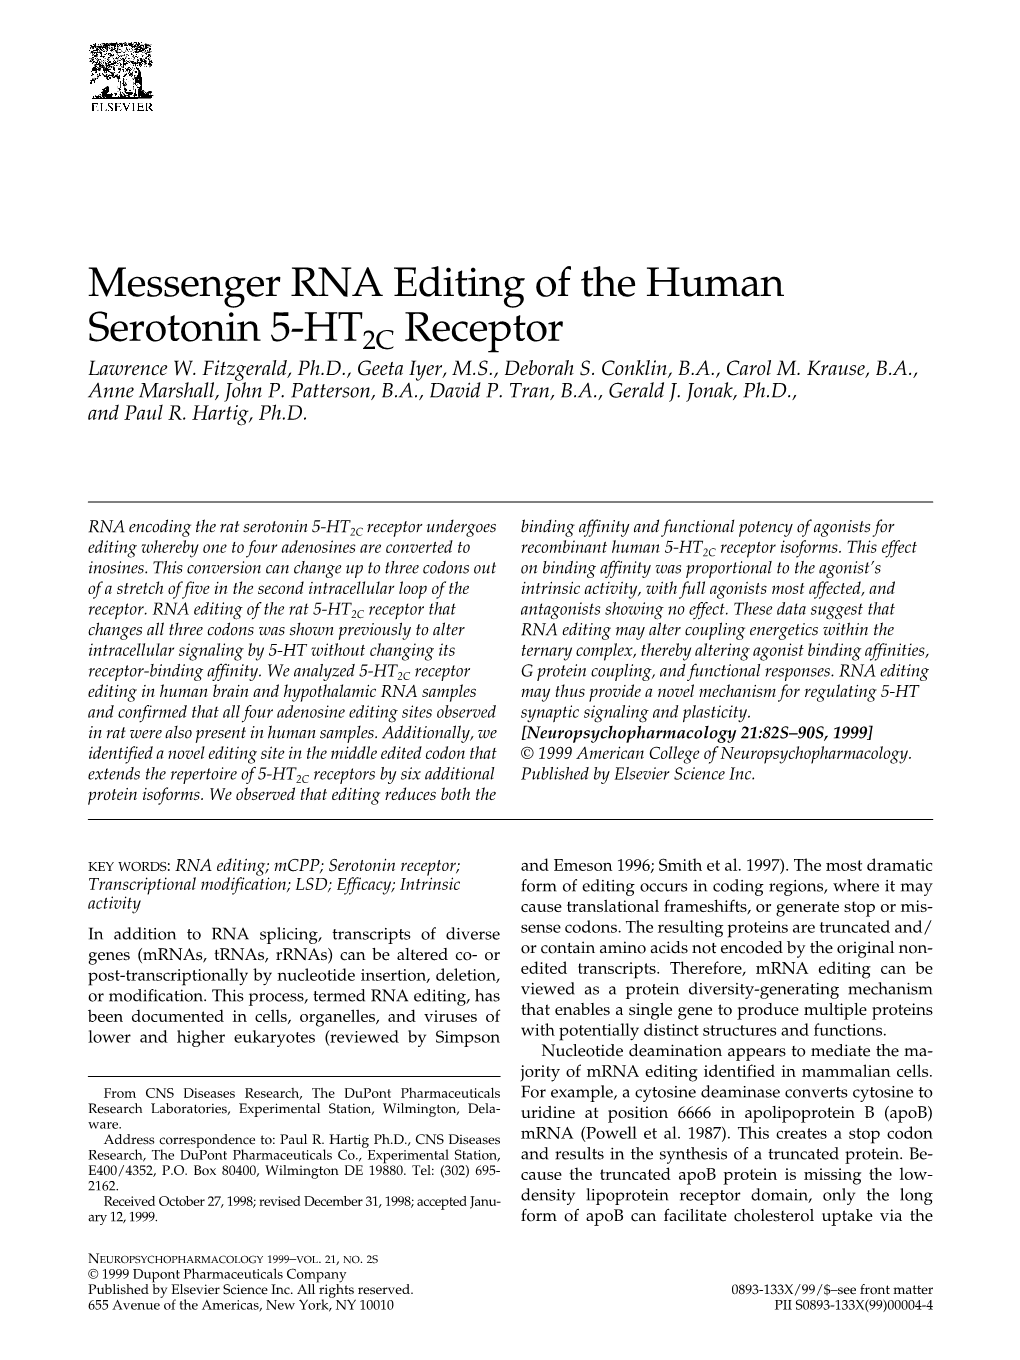 Messenger RNA Editing of the Human Serotonin 5-HT2C Receptor Lawrence W